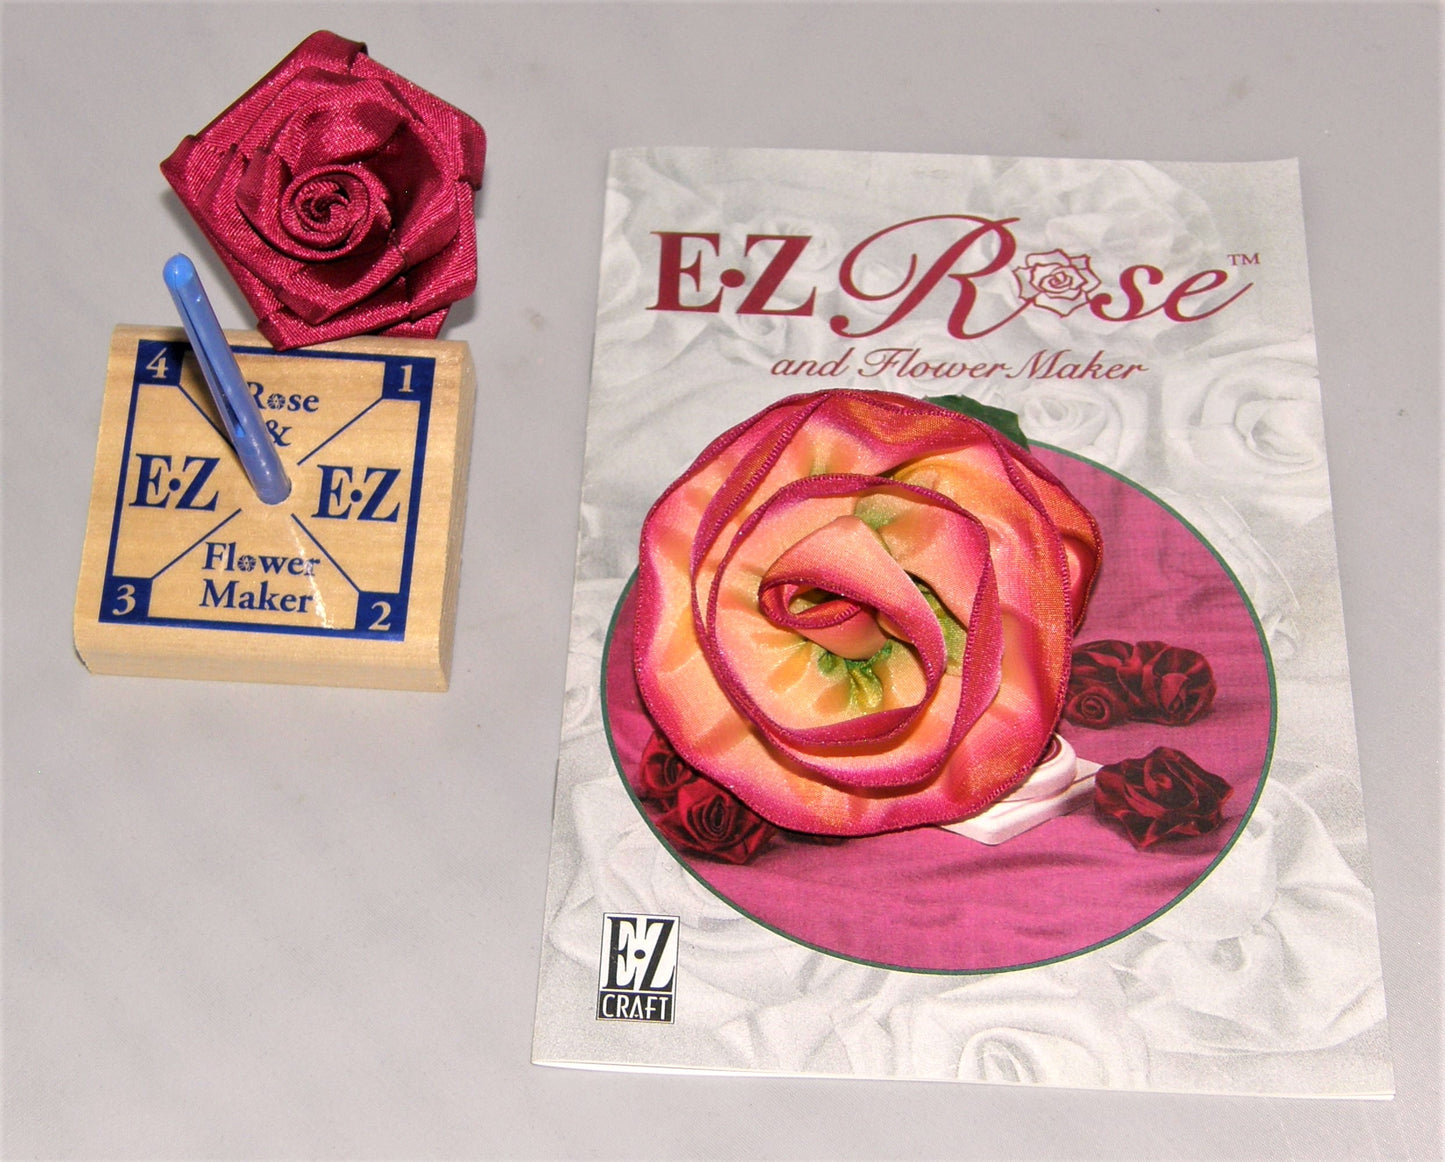 E-Z Rose and Flower Maker Attachment Kit